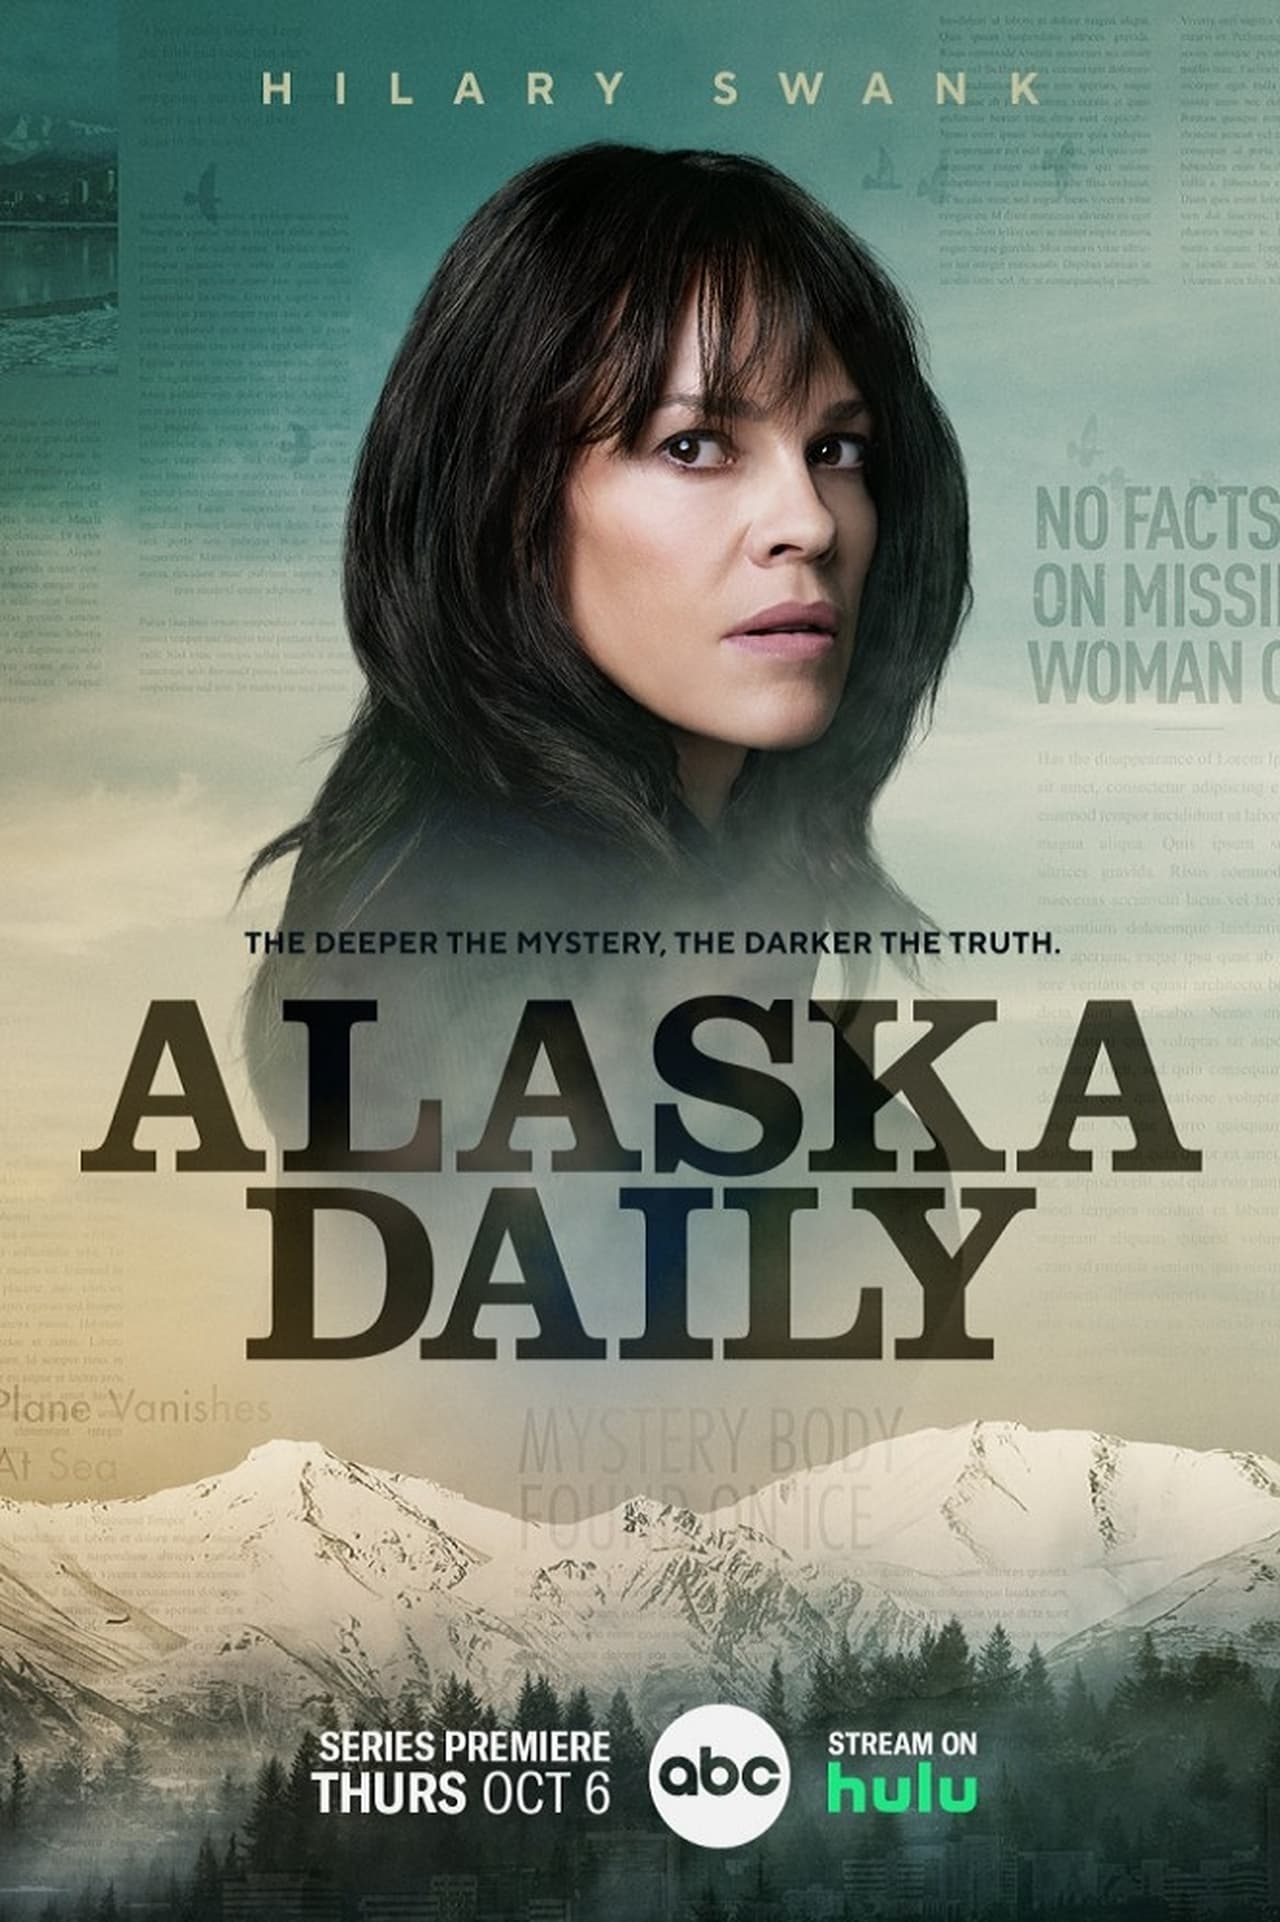 Alaska Daily Episode 3 Release Date